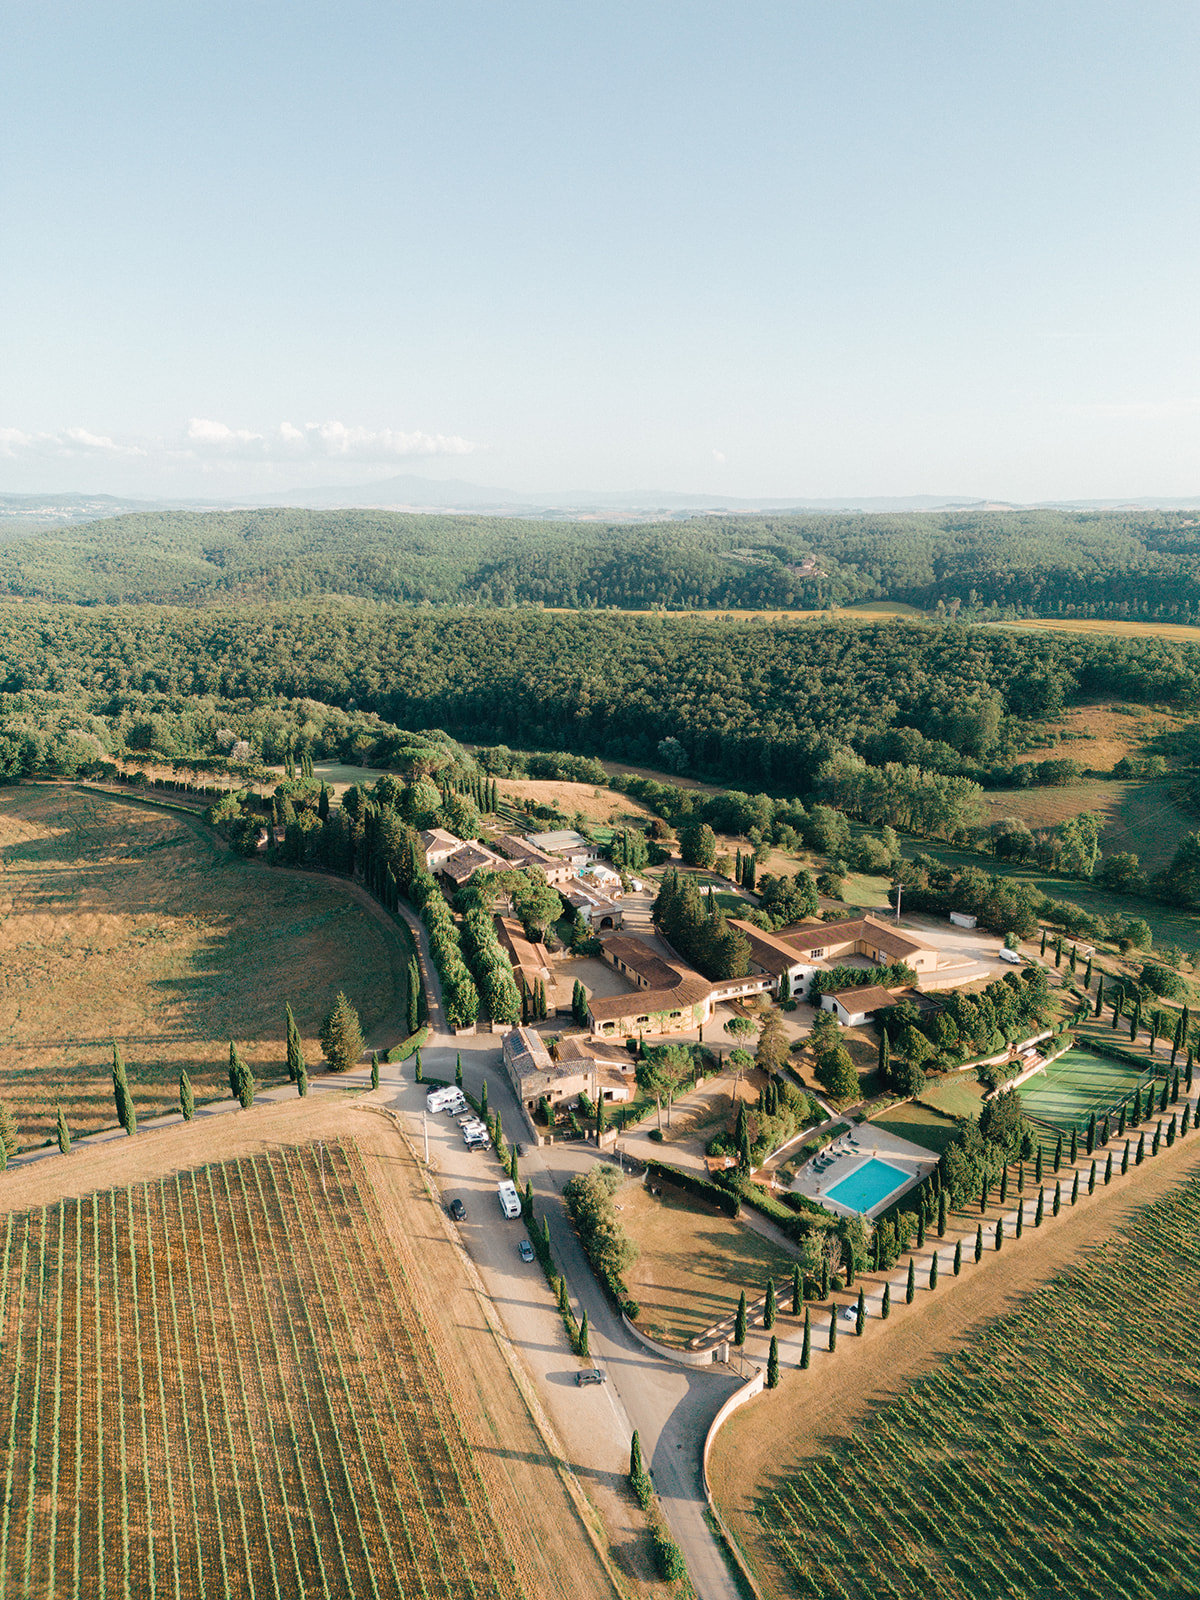 Villa la Selva Wine Resort seen from above